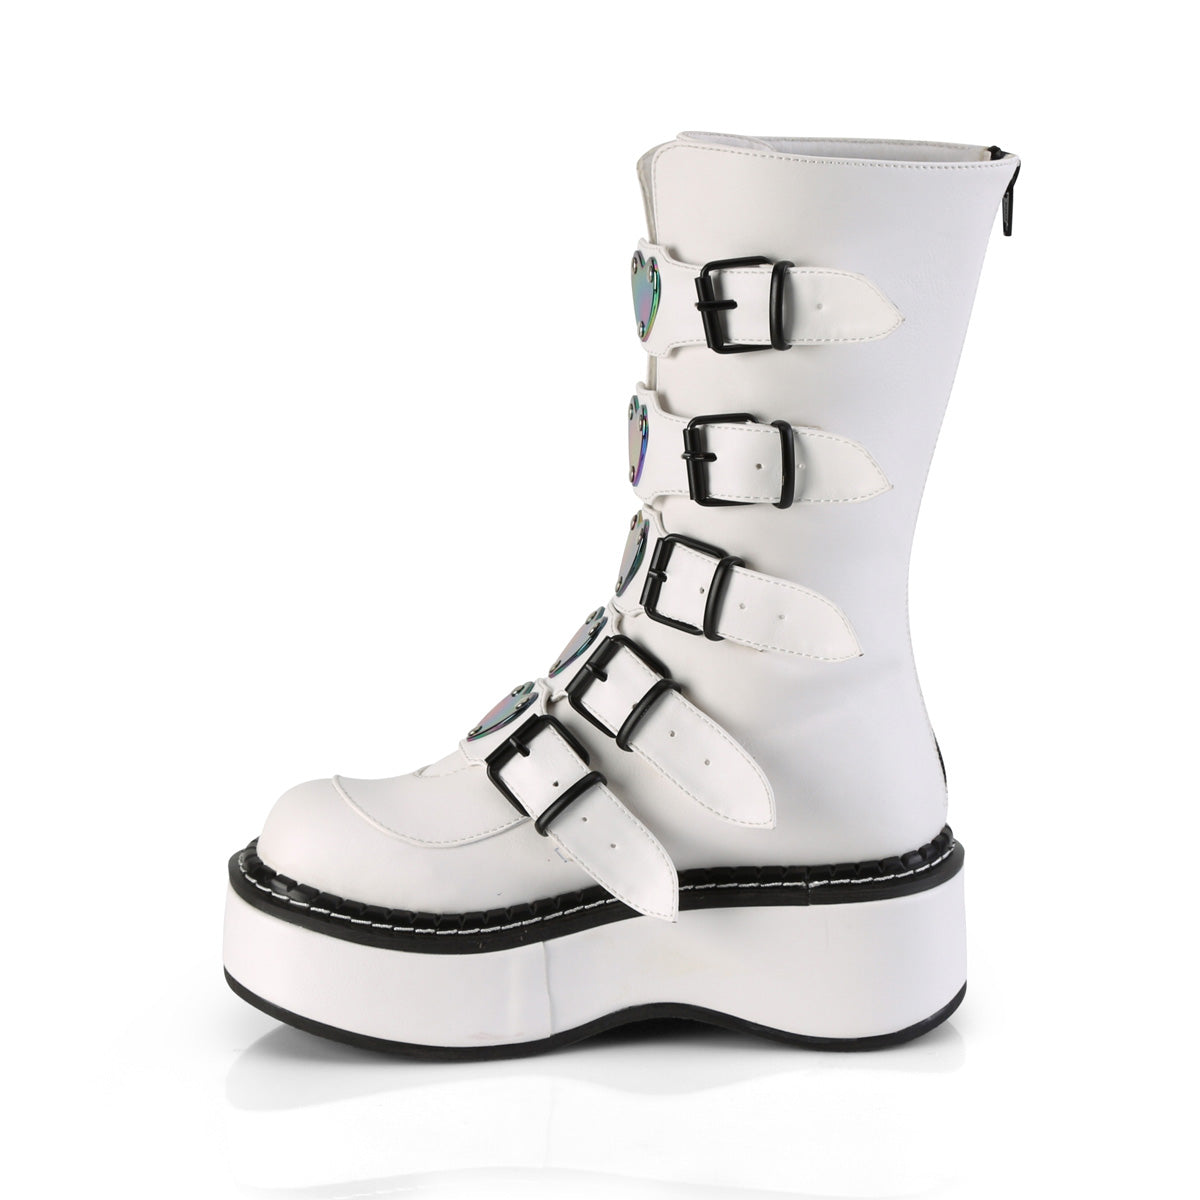 EMILY-330 Demonia White Vegan Leather Women's Mid-Calf & Knee High Boots [Alternative Footwear]